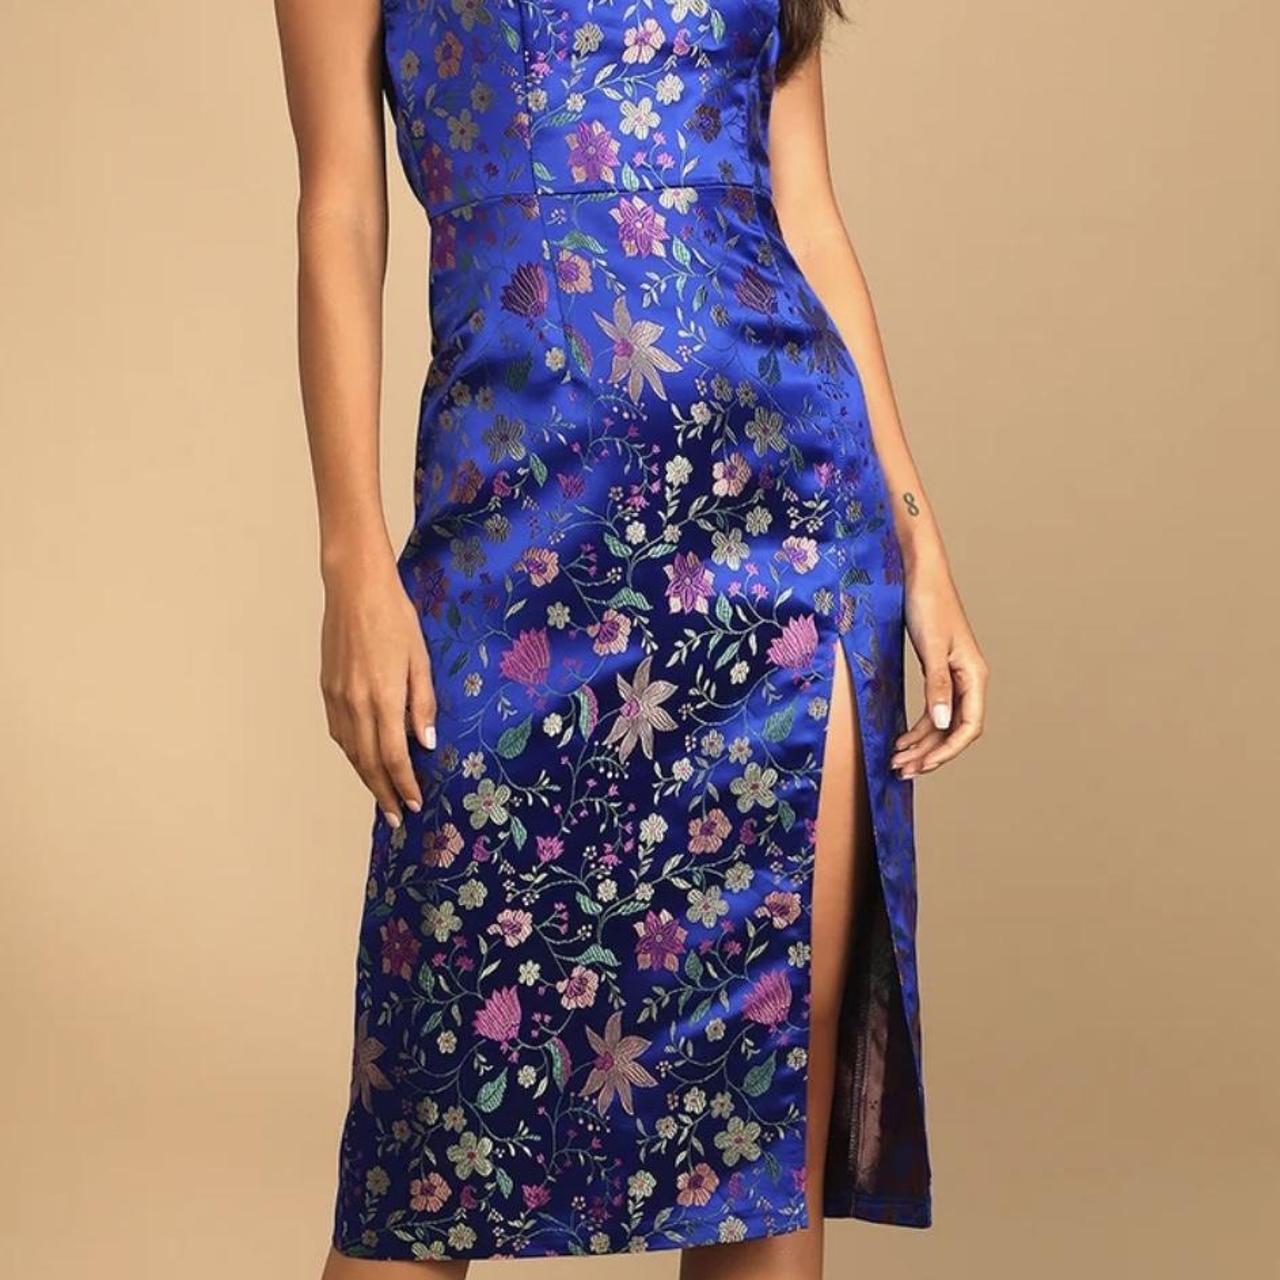 Make a Move Blue Floral Satin Jacquard Strapless Midi Dress